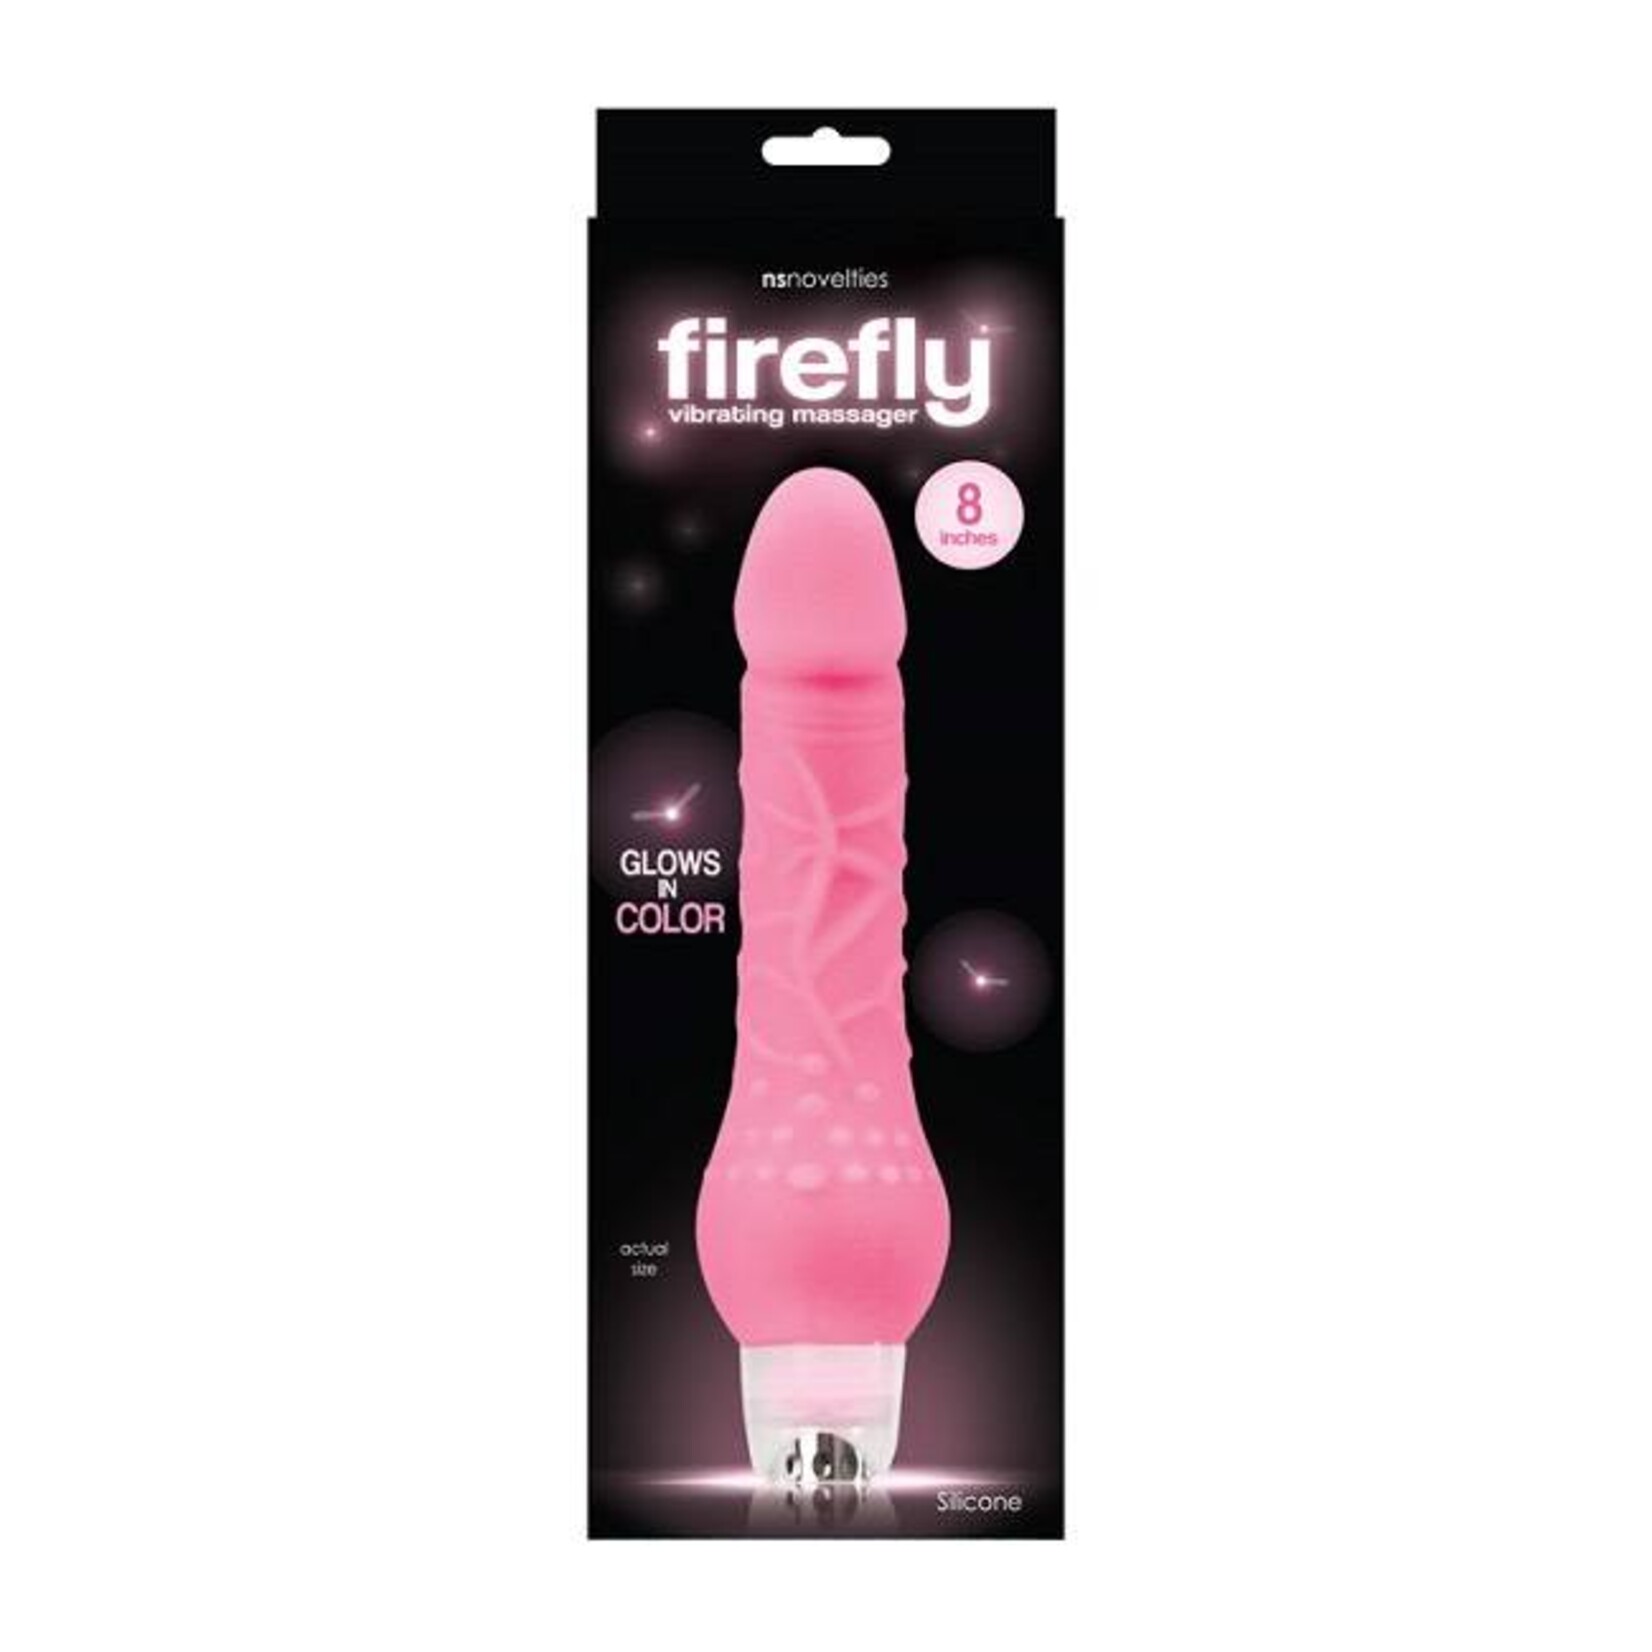 NS Novelties Firefly 8" Vibrating Massager